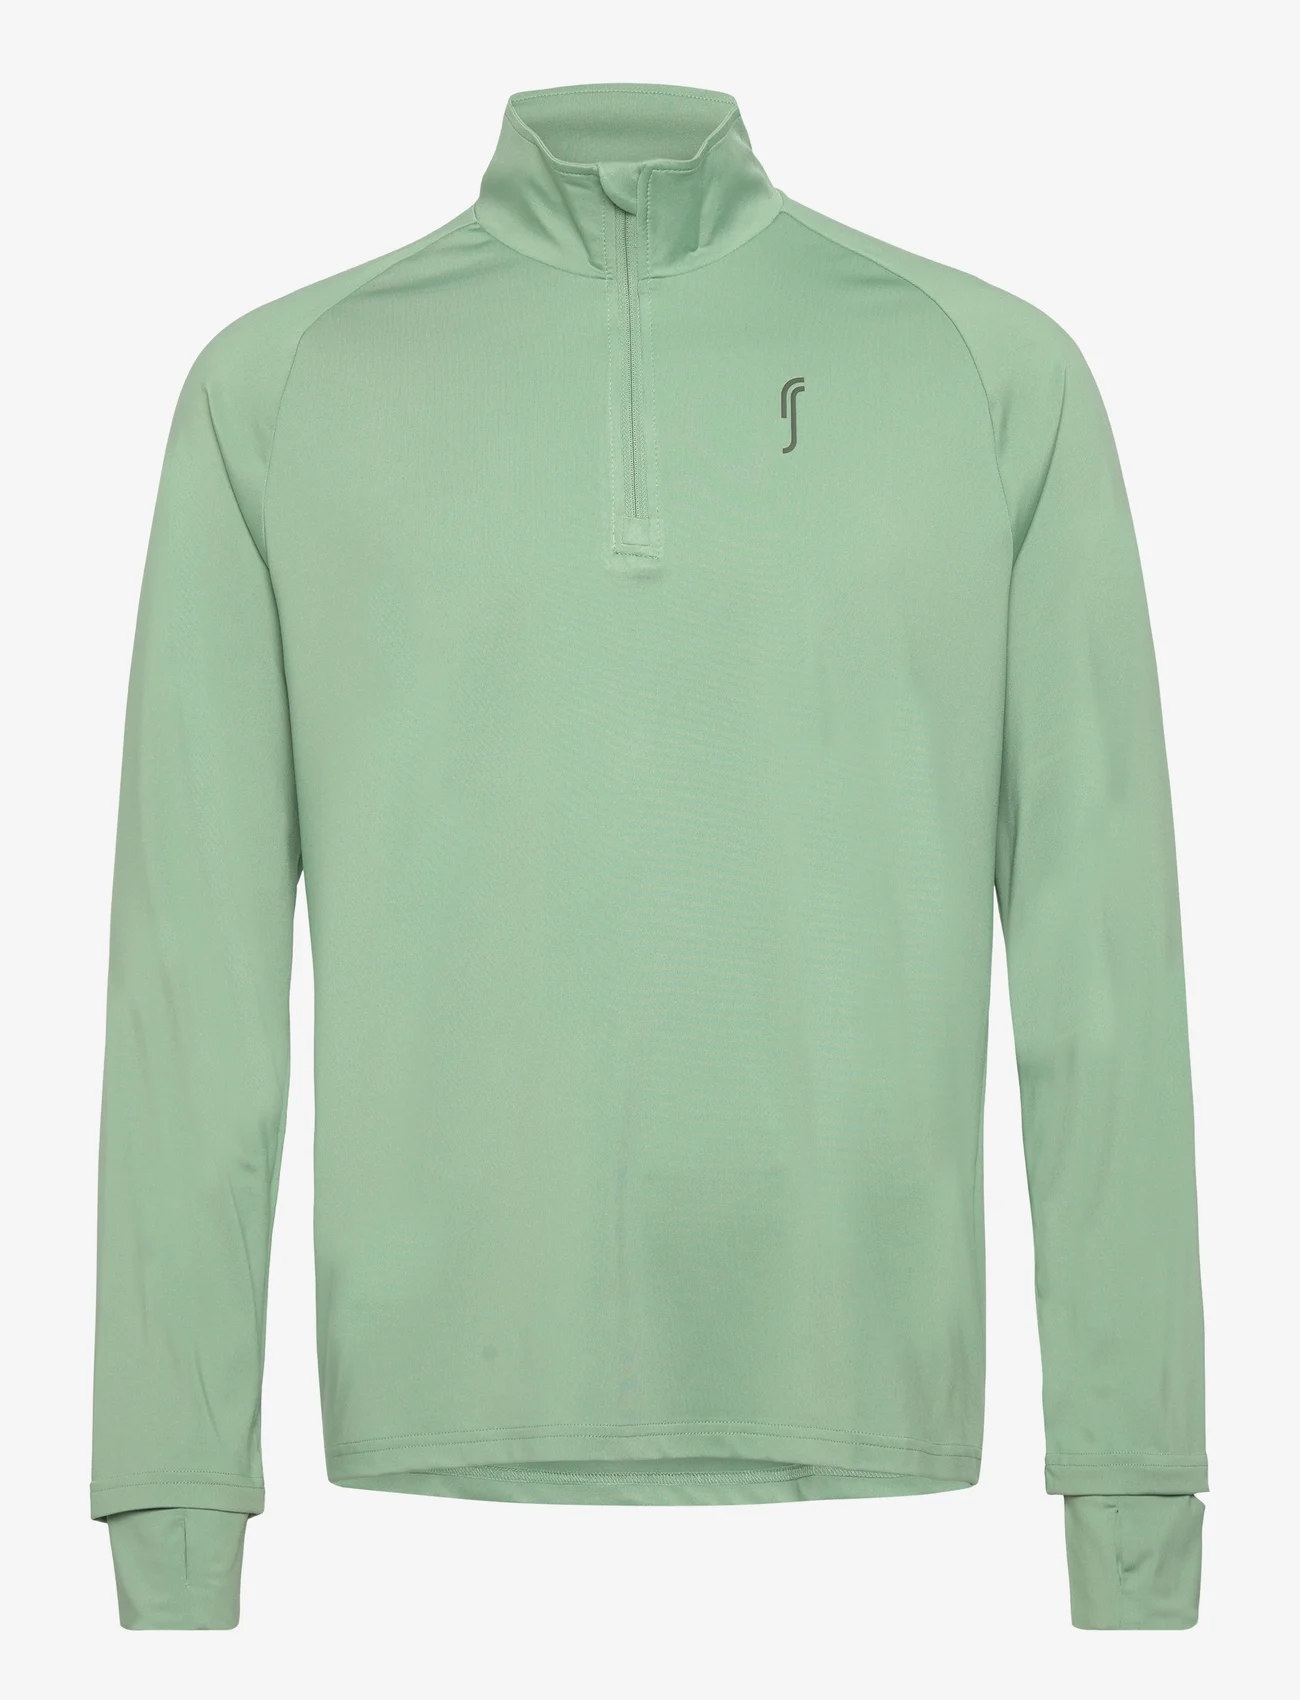 RS Sports - Men’s Half Zip Sweater - sweatshirts - soft green - 0